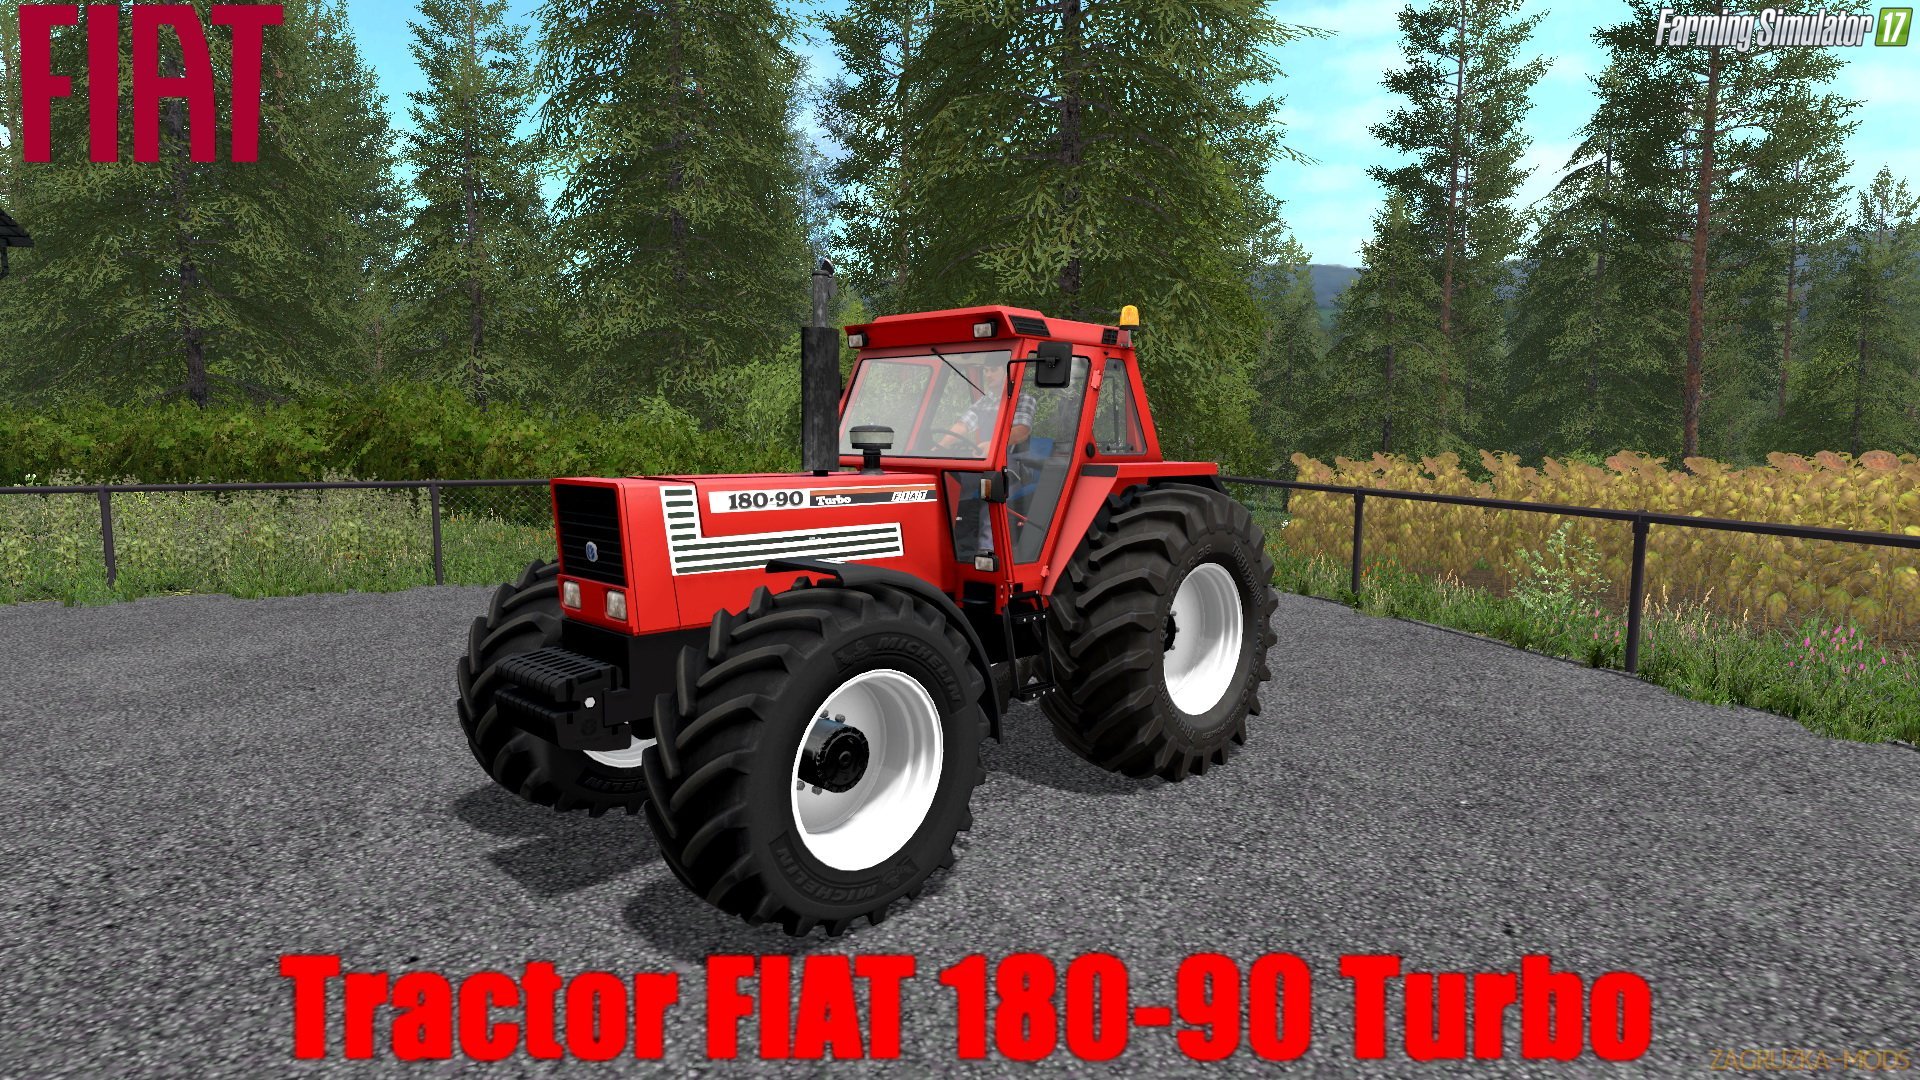 FIAT 180-90 Turbo v0.9 for FS 17